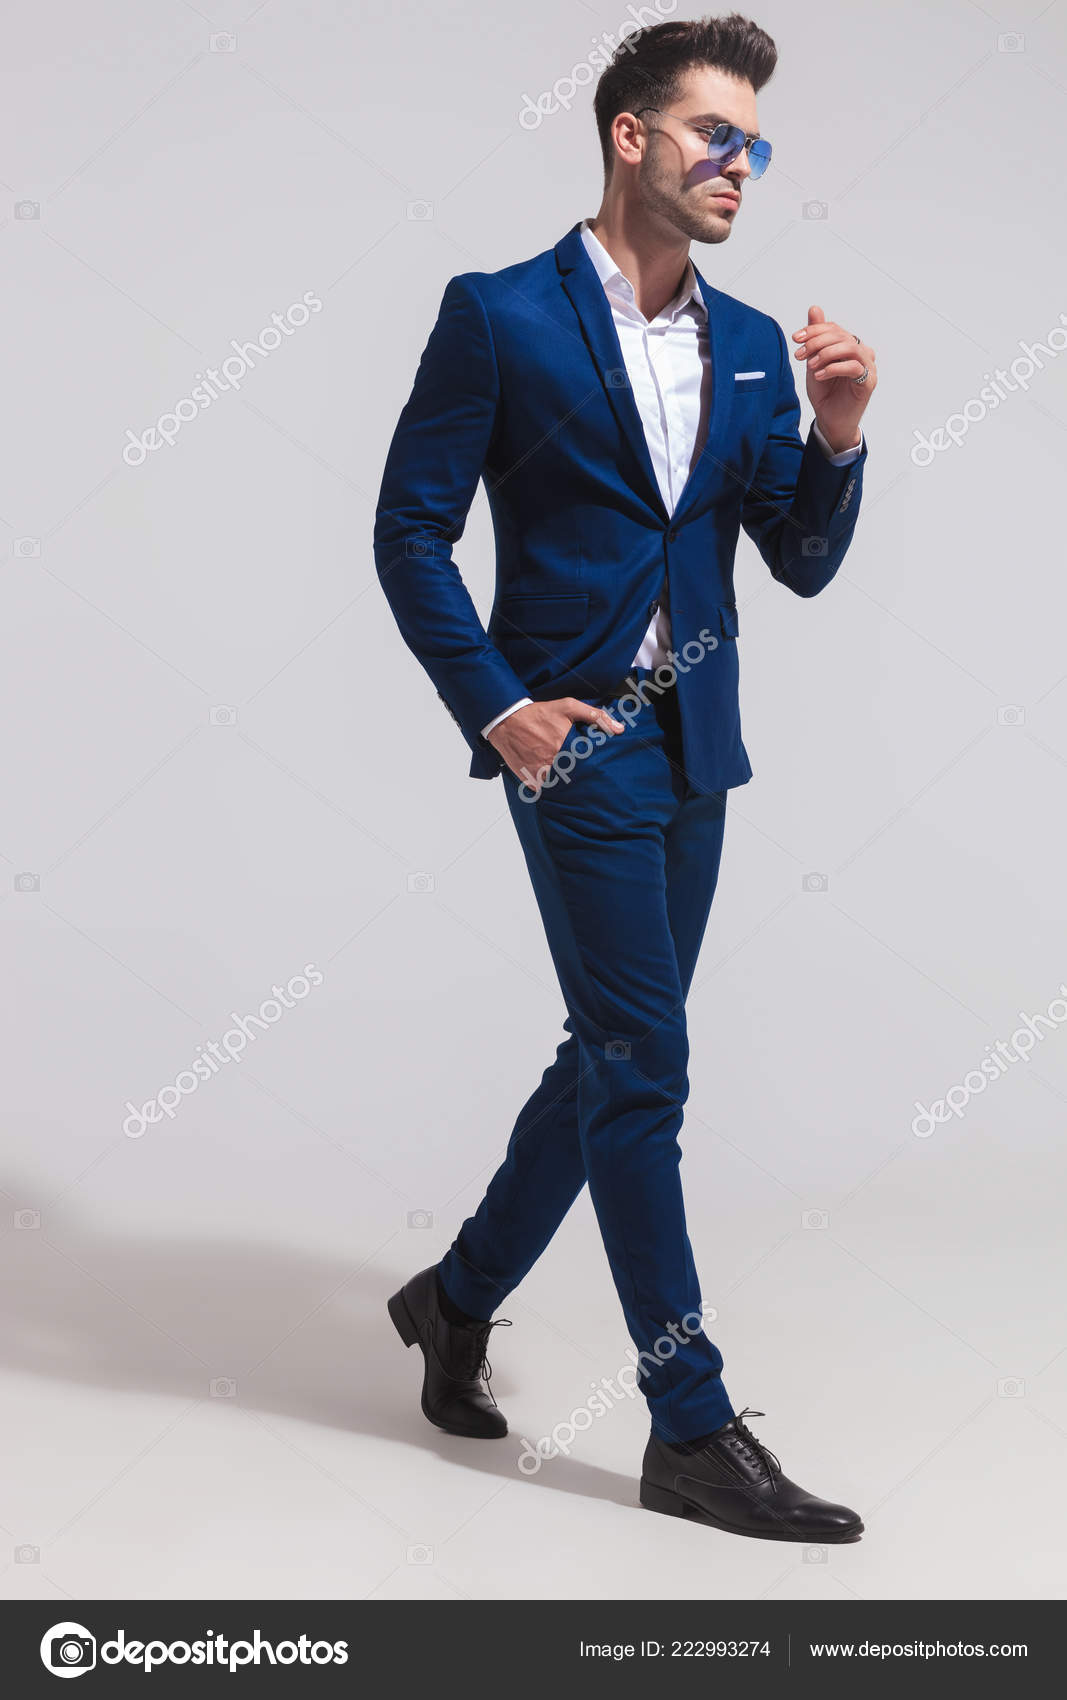 https://st4.depositphotos.com/1007995/22299/i/1600/depositphotos_222993274-stock-photo-side-view-fashion-elegant-man.jpg